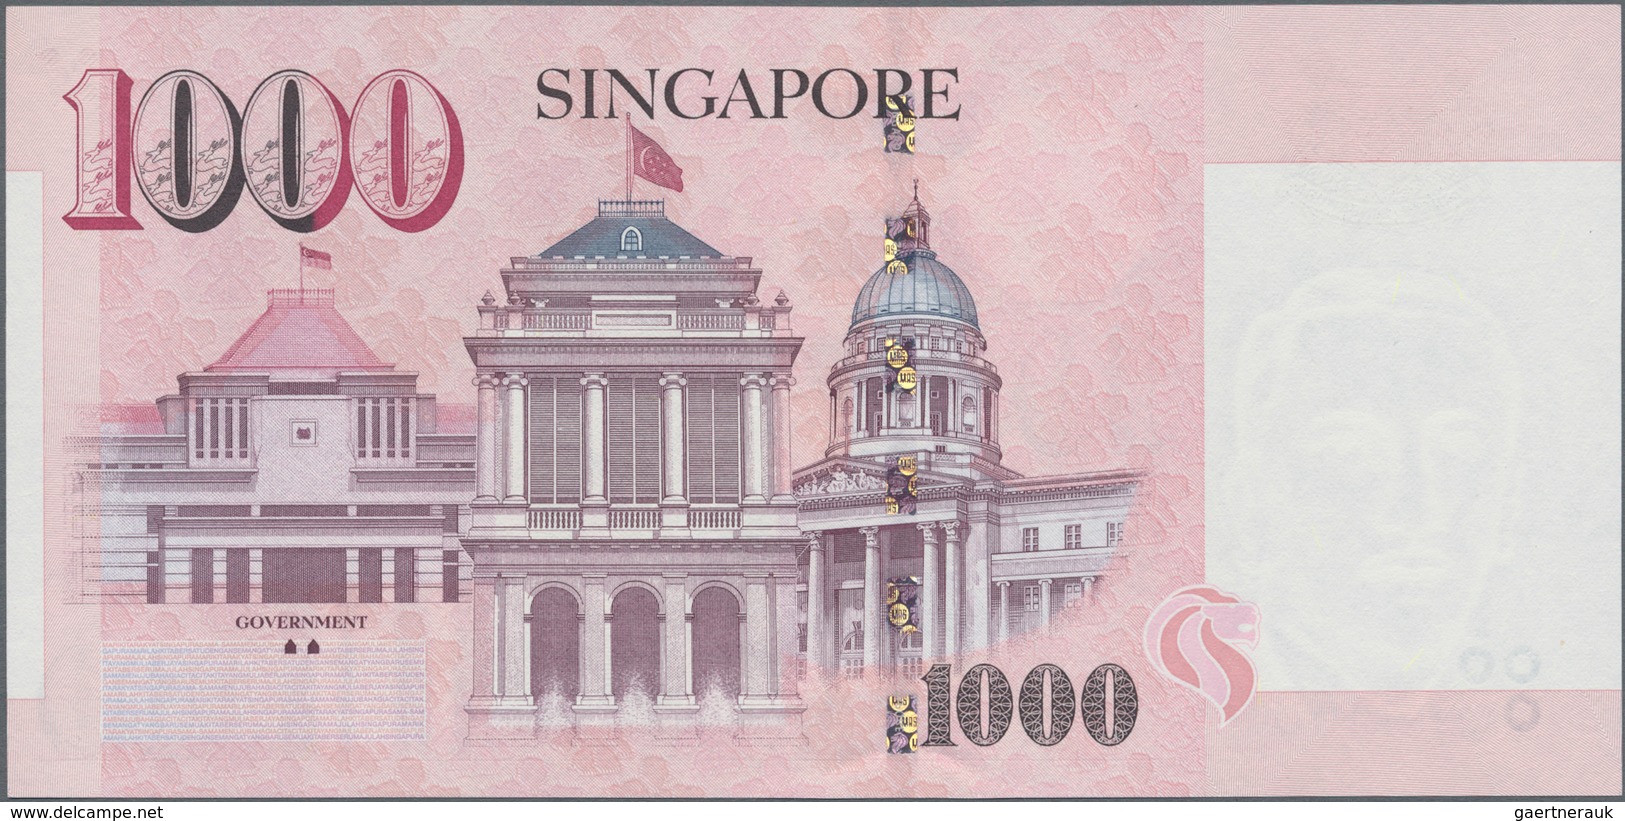 Singapore / Singapur: 1000 Dollars ND(2010-18), P.51i In Perfect UNC Condition. - Singapore